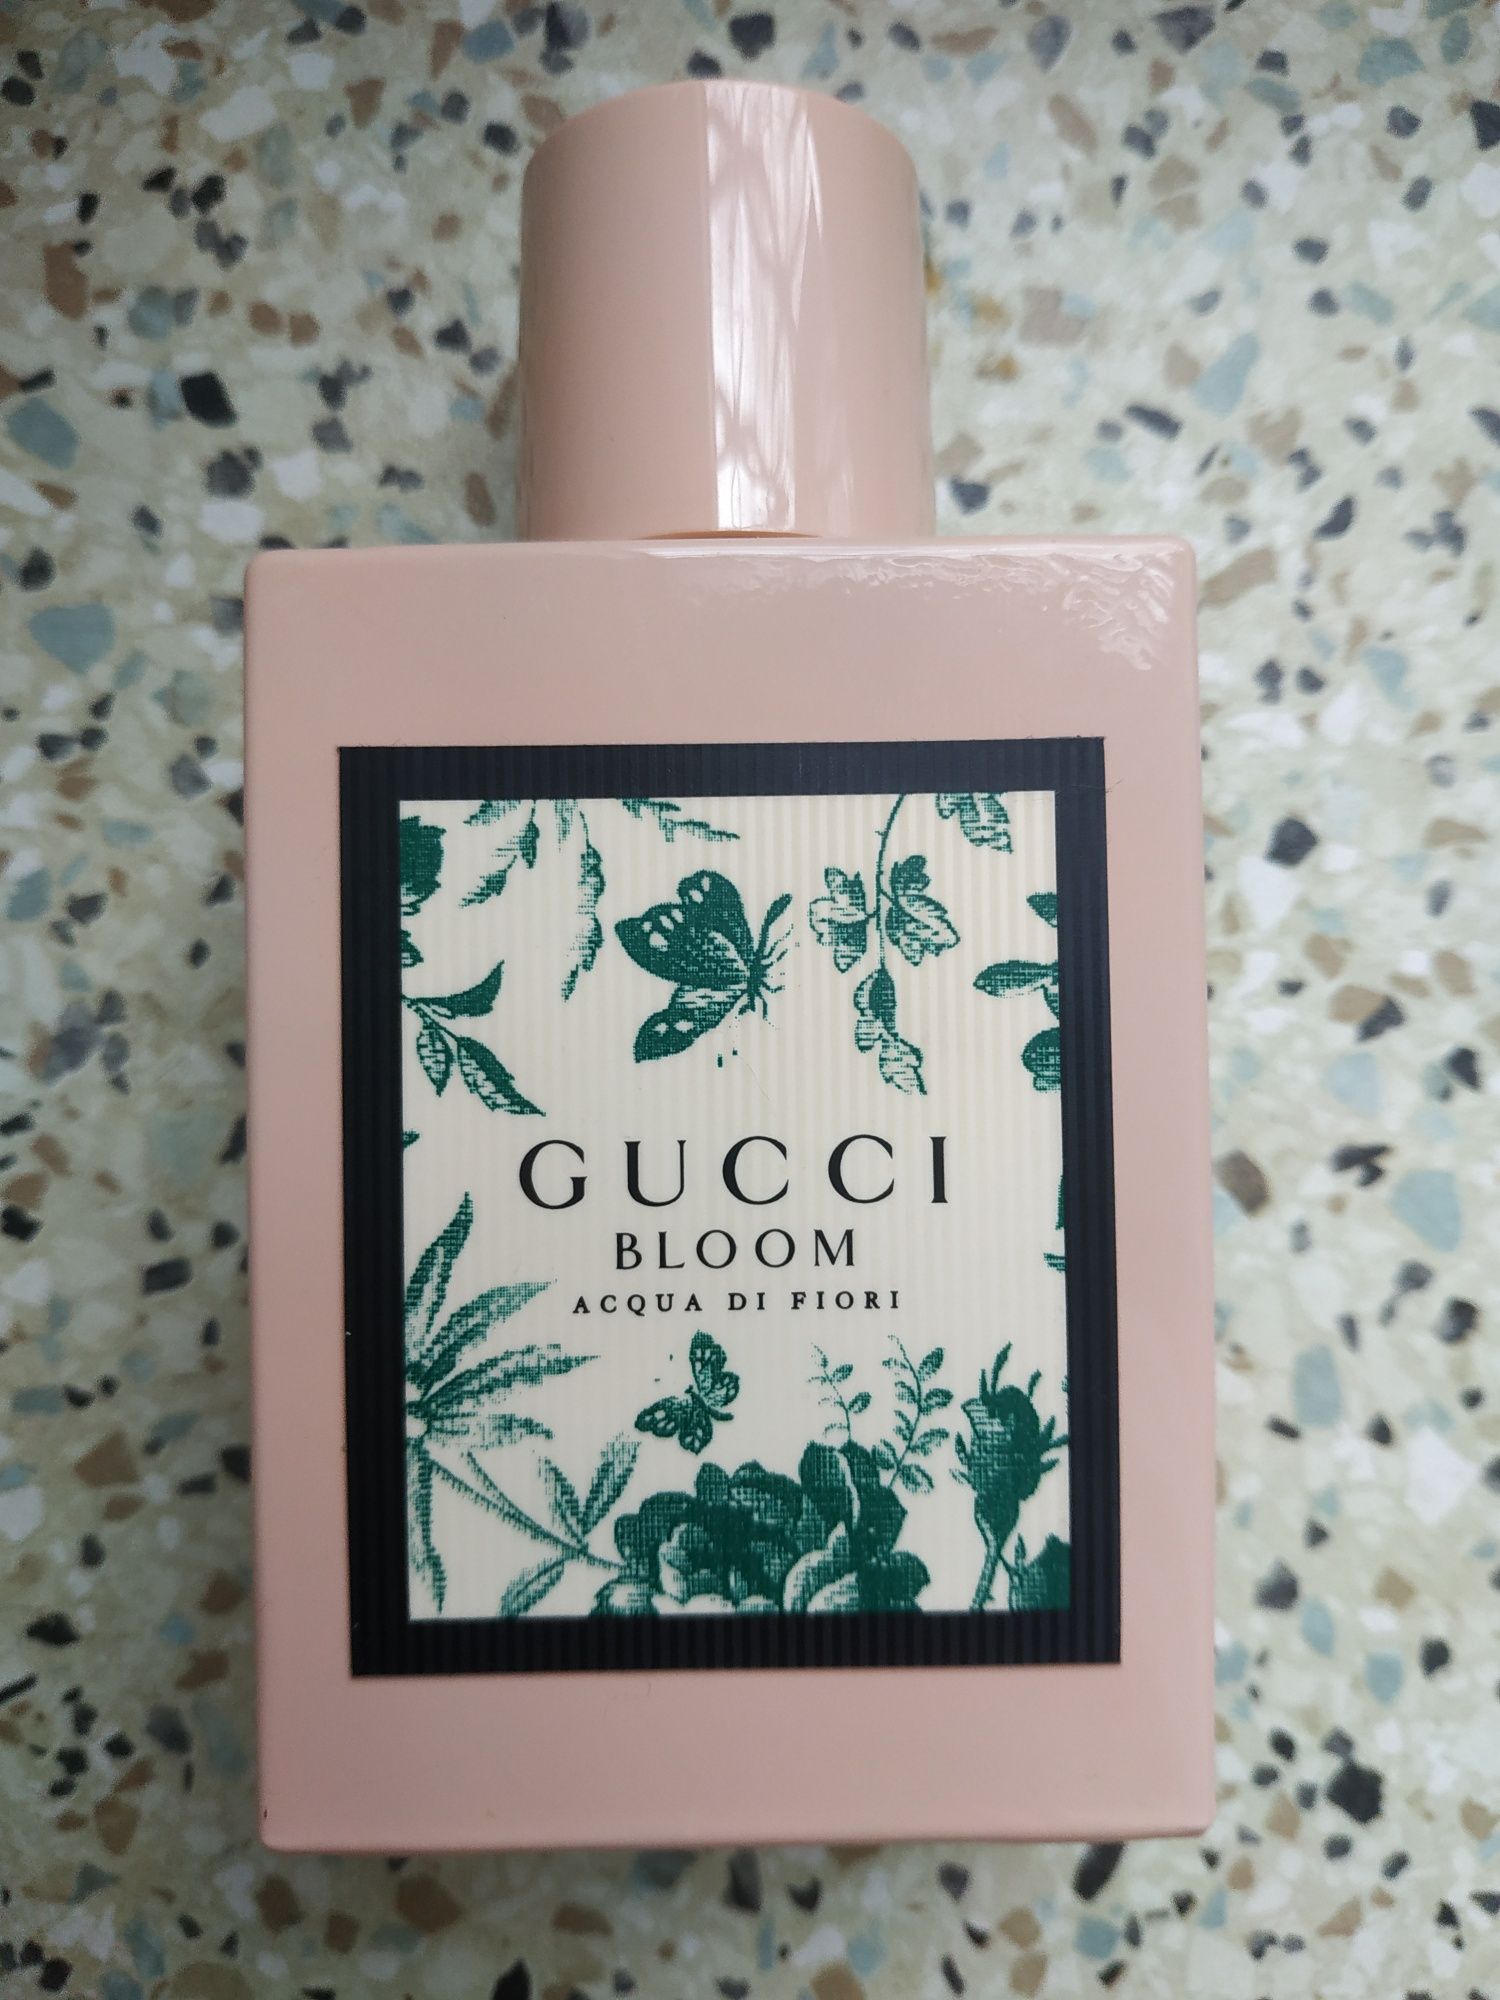 Gucci Bloom Acqua Di Fiori 50ml